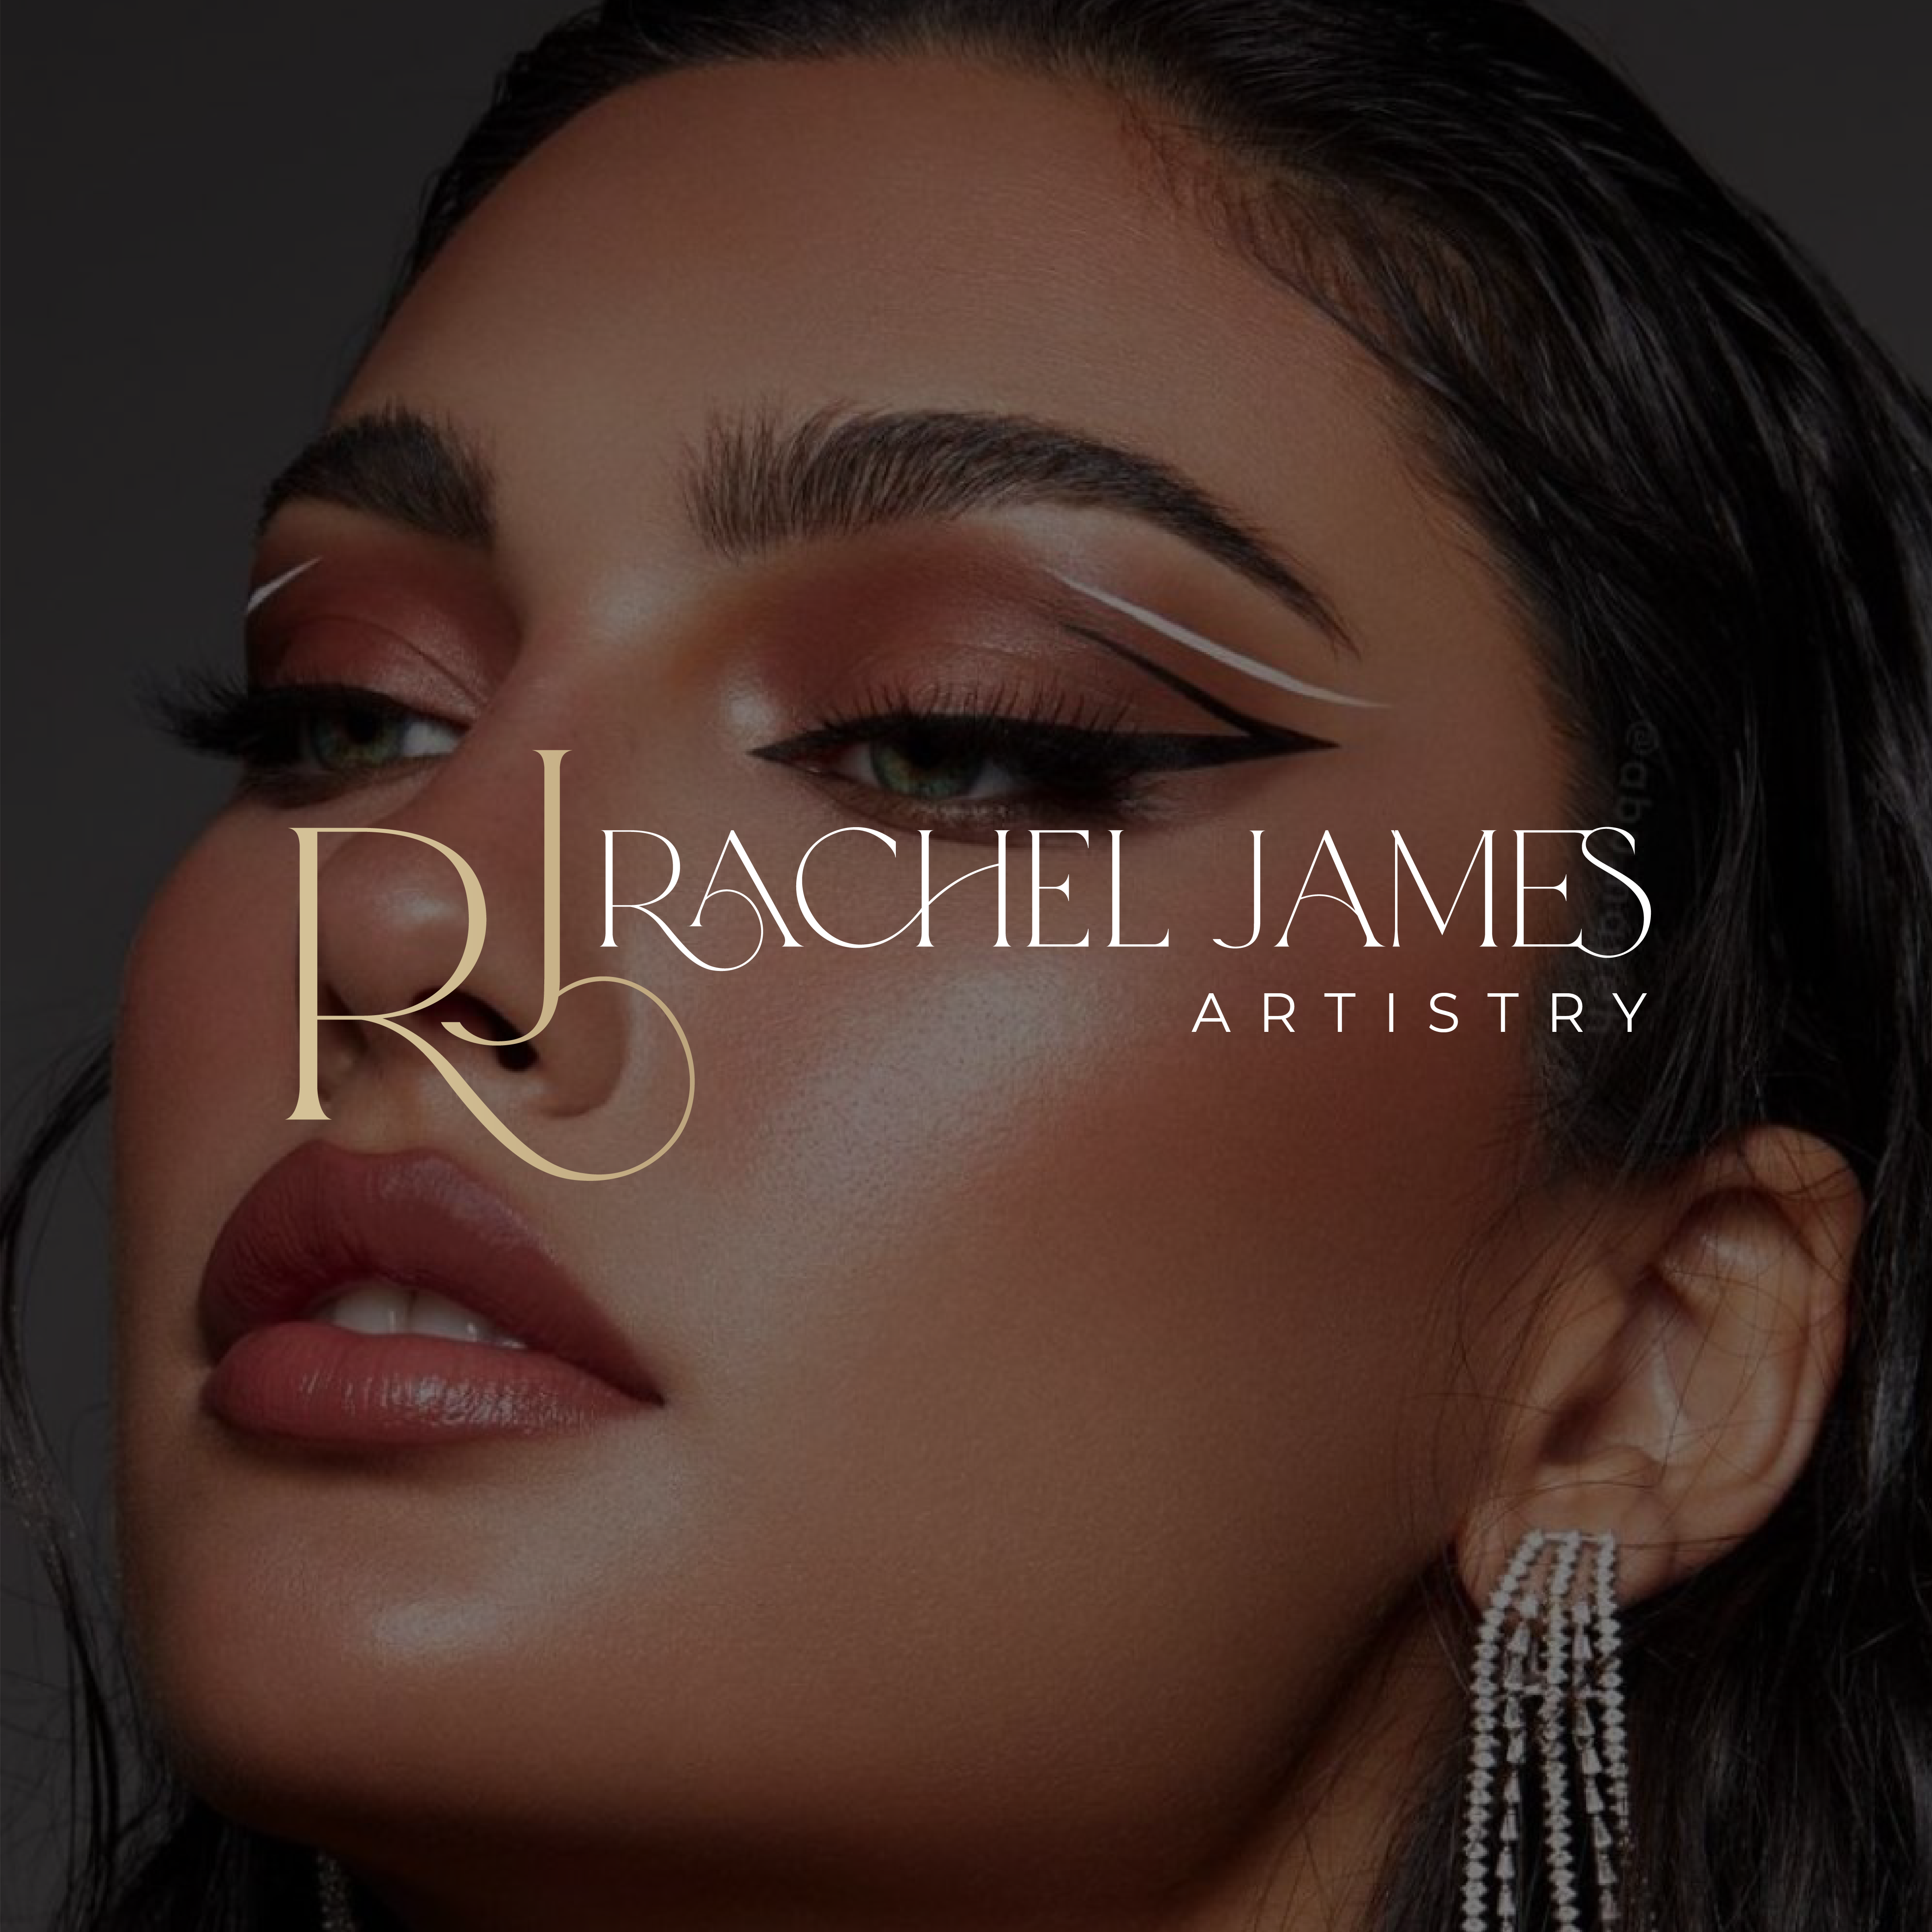 Rachel James Artistry Pty Ltd - Campbelltown, AU, a natural look makeup